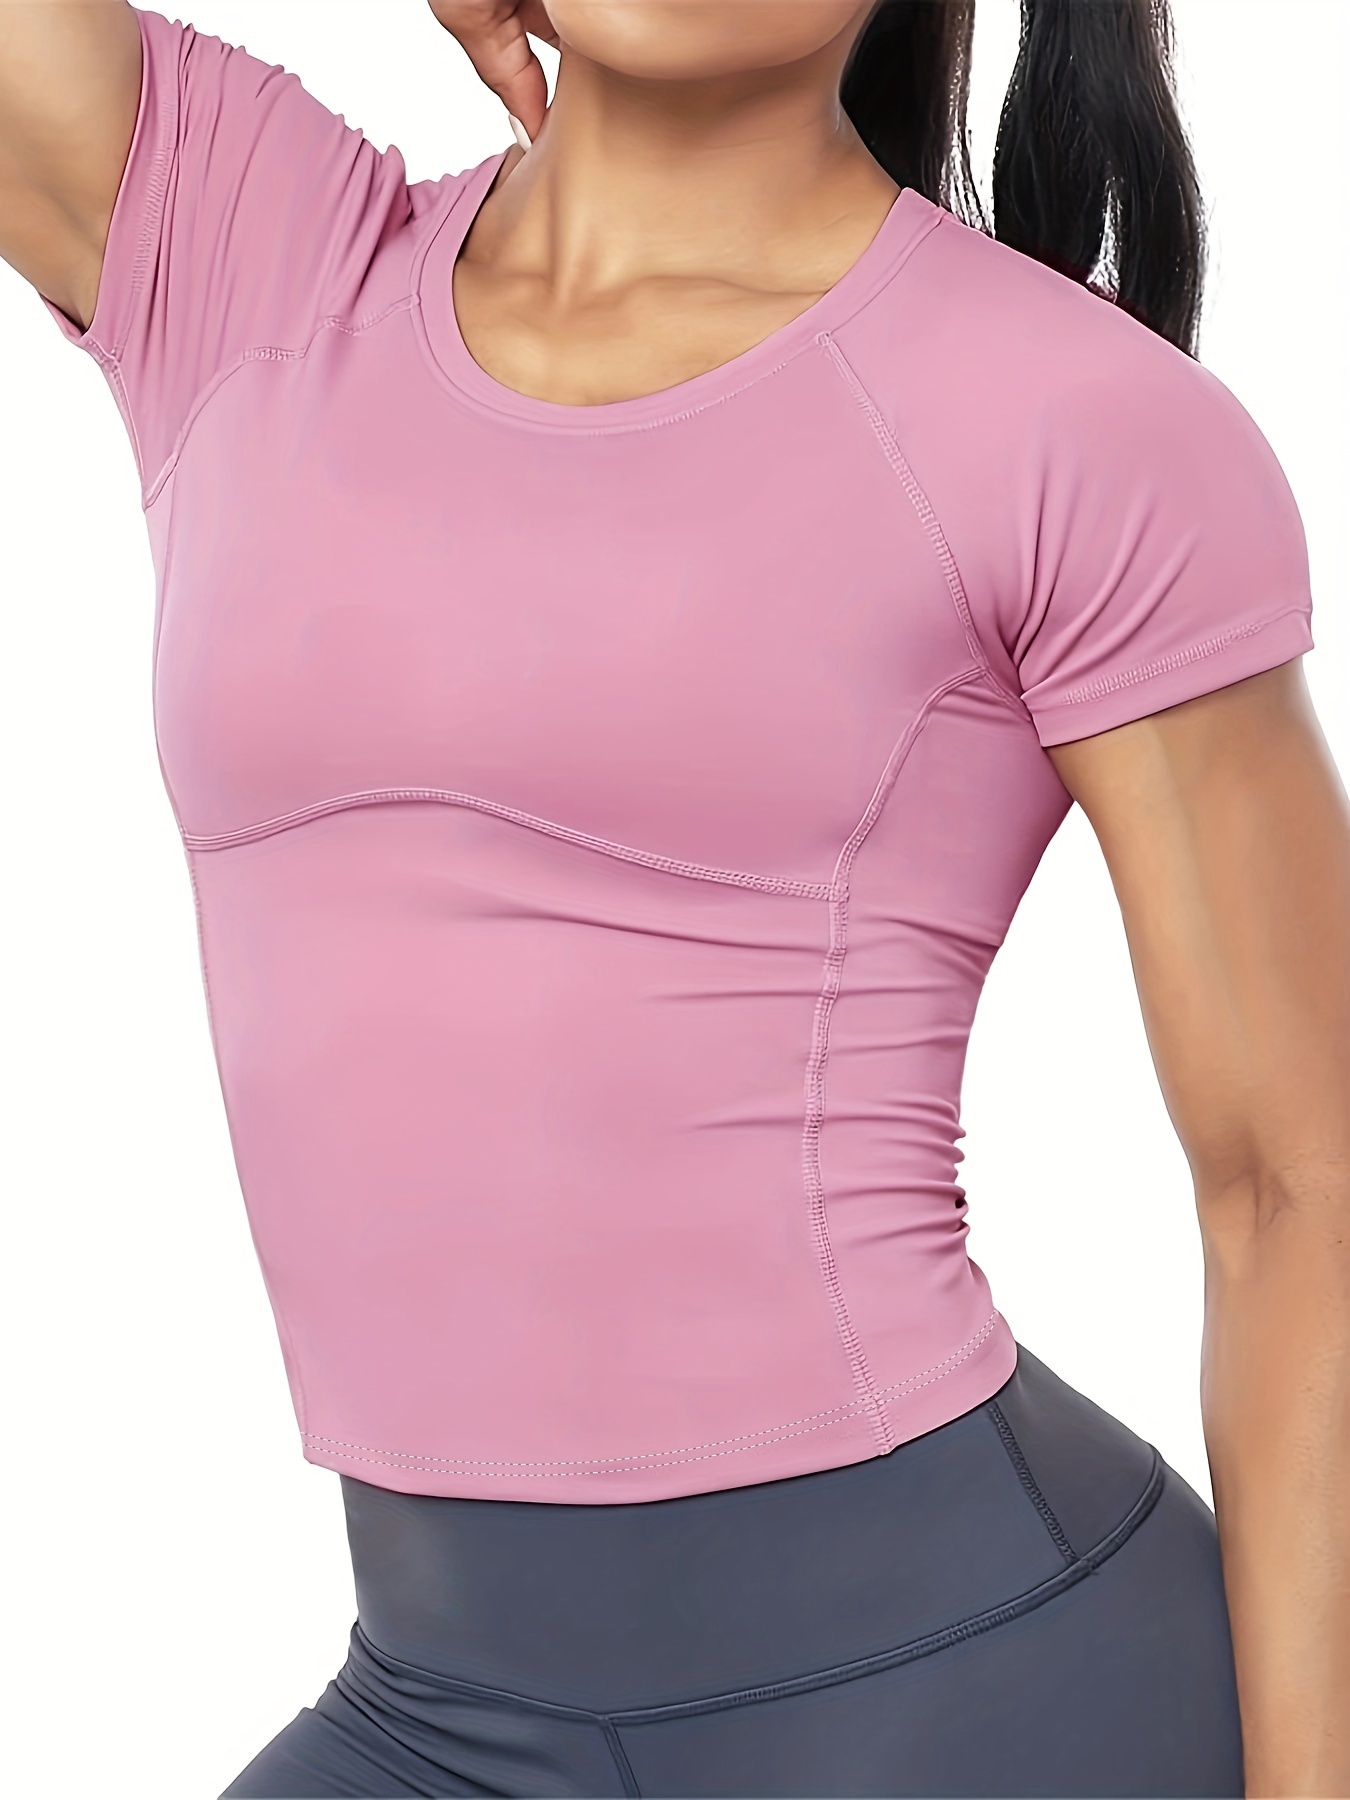 NKOOGH Nice Shirts for Women Pink Workout Tops T Shirts Women Puff